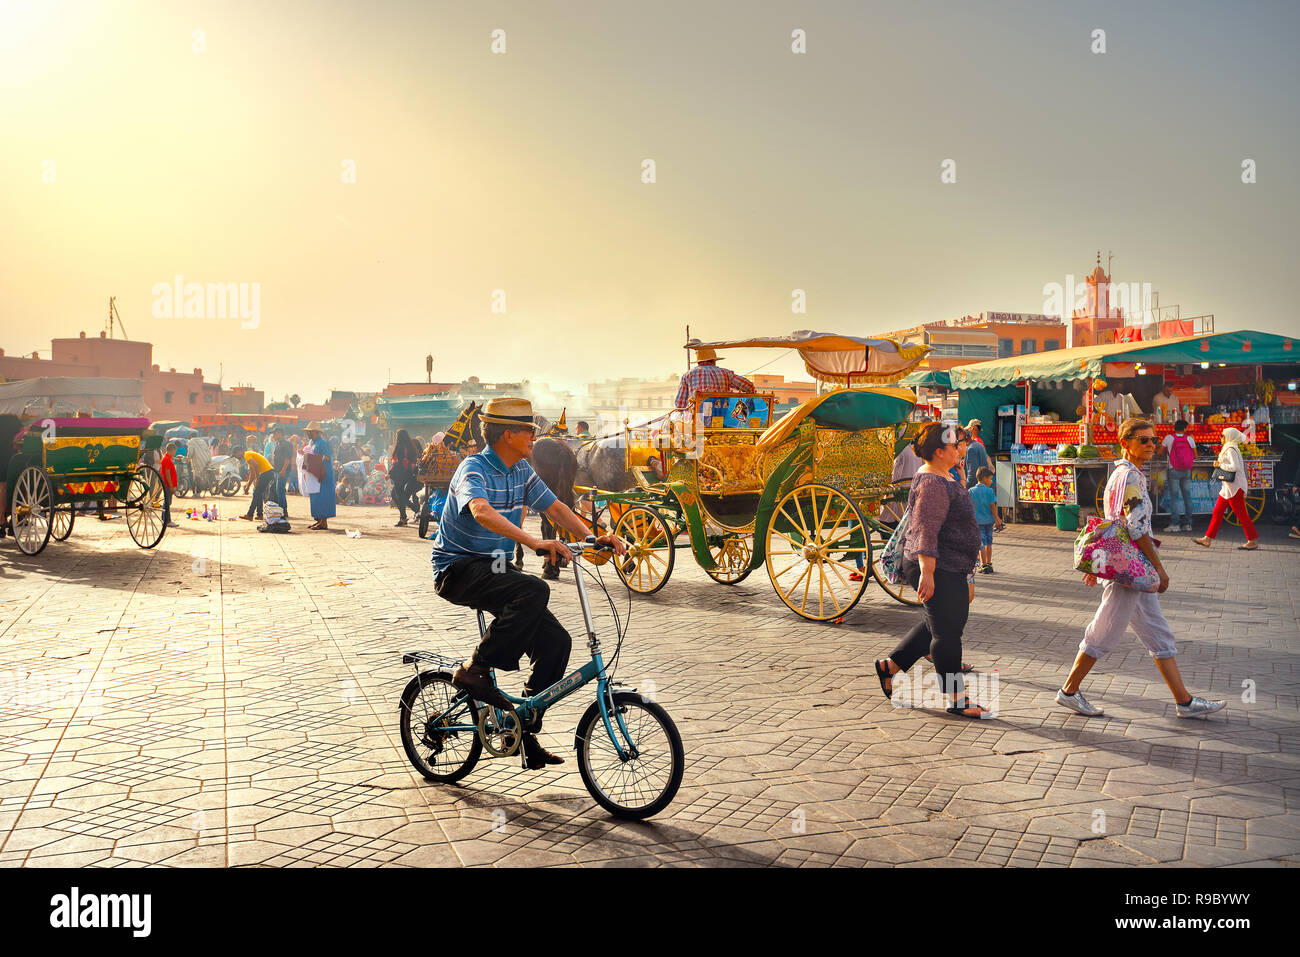 Street scene on famous market square Djemaa el Fna at Marrakesh's Medina quarter. Marrakesh, Morocco, North Africa Stock Photo